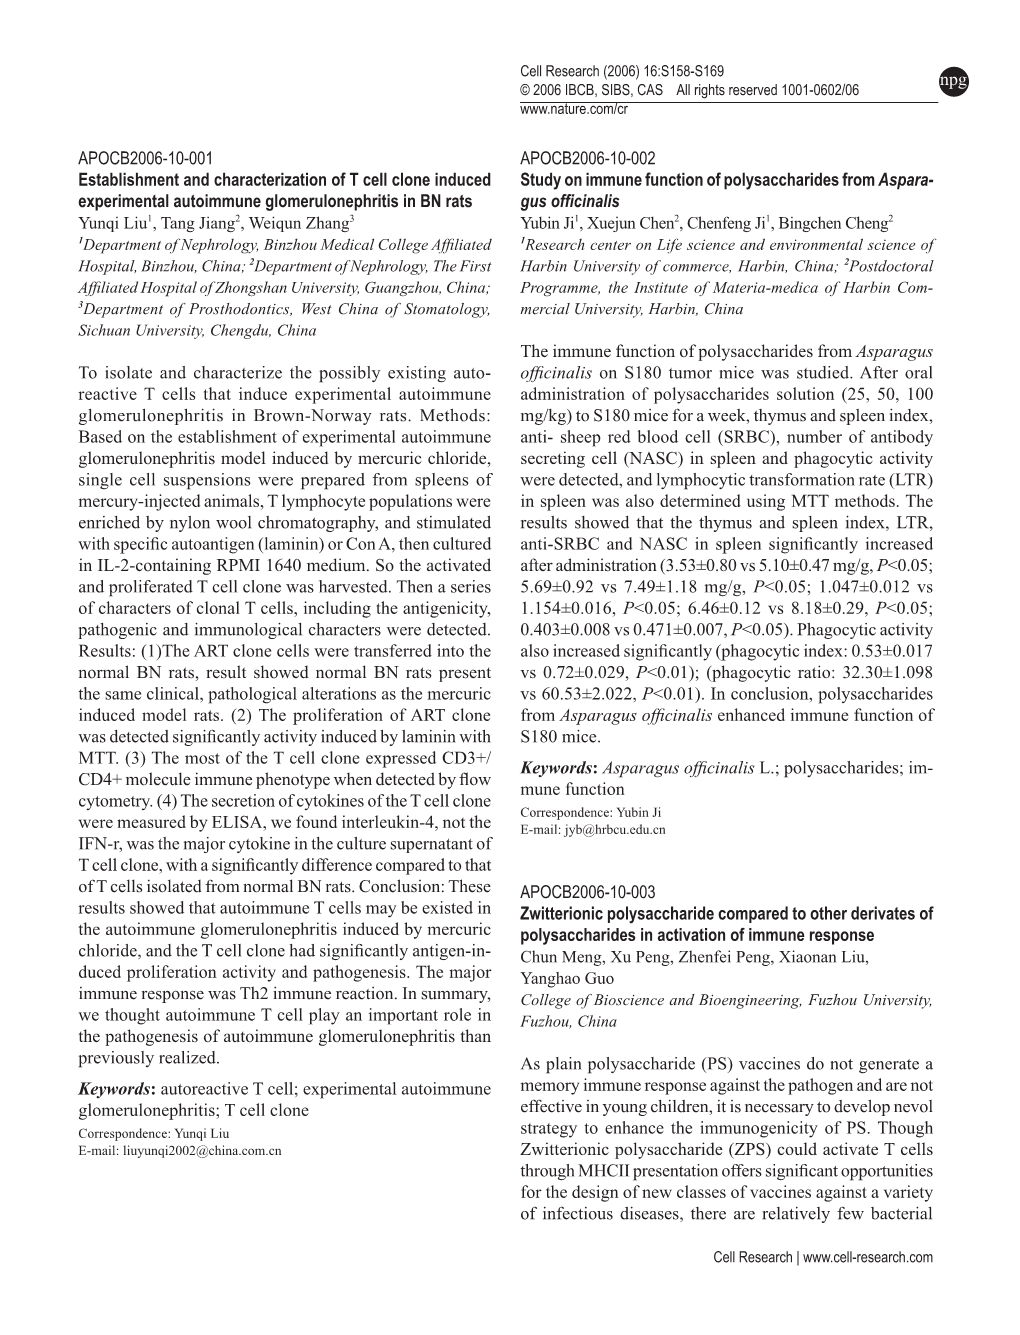 APOCB2006-10-001 Establishment and Characterization of T Cell Clone